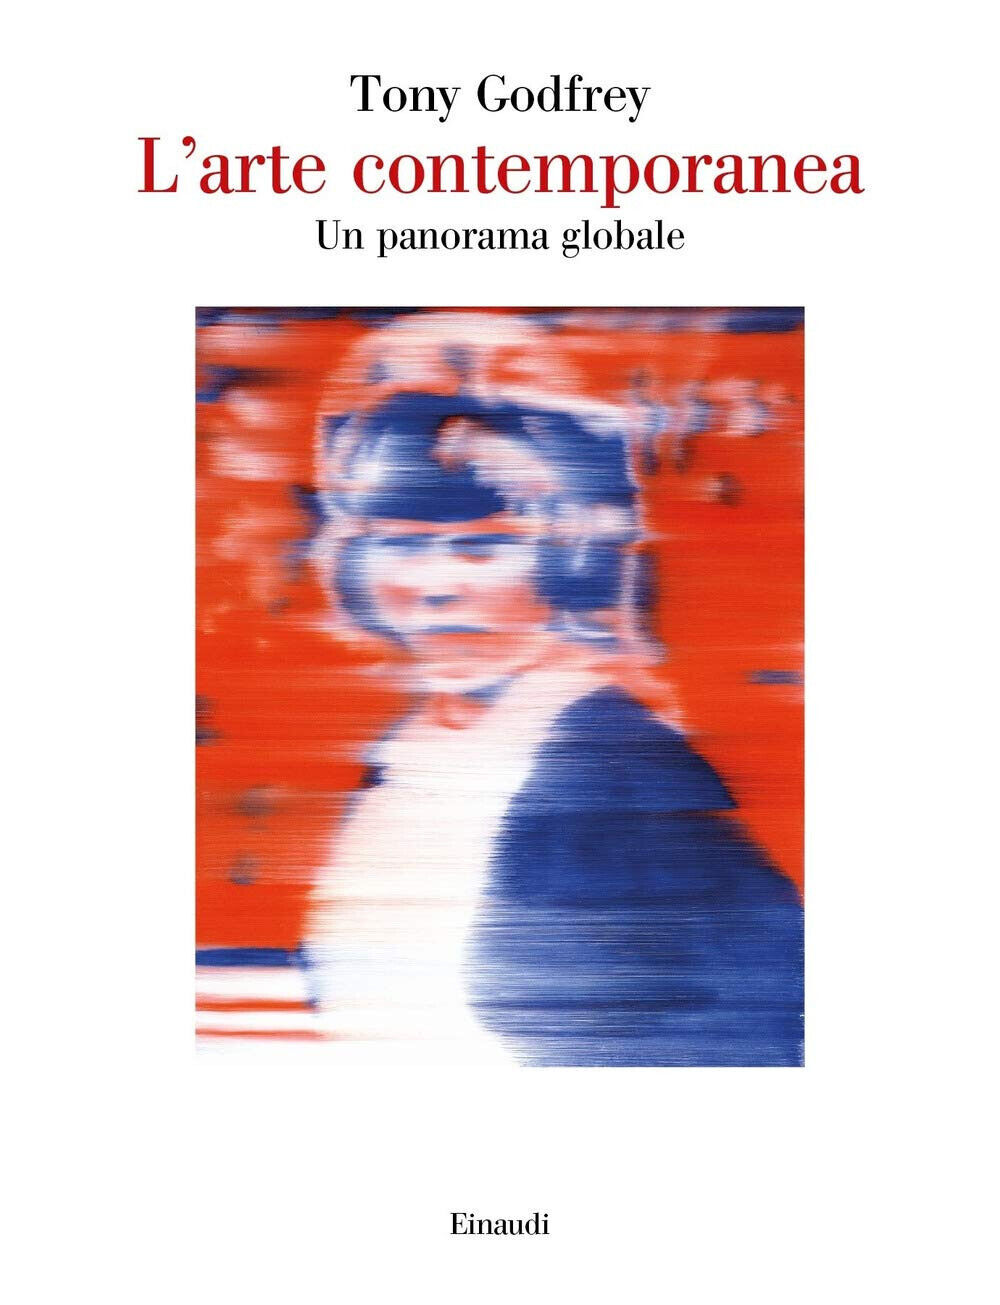 L' arte contemporanea. Un panorama globale - Tony Godfrey - Einaudi, 2020 libro usato